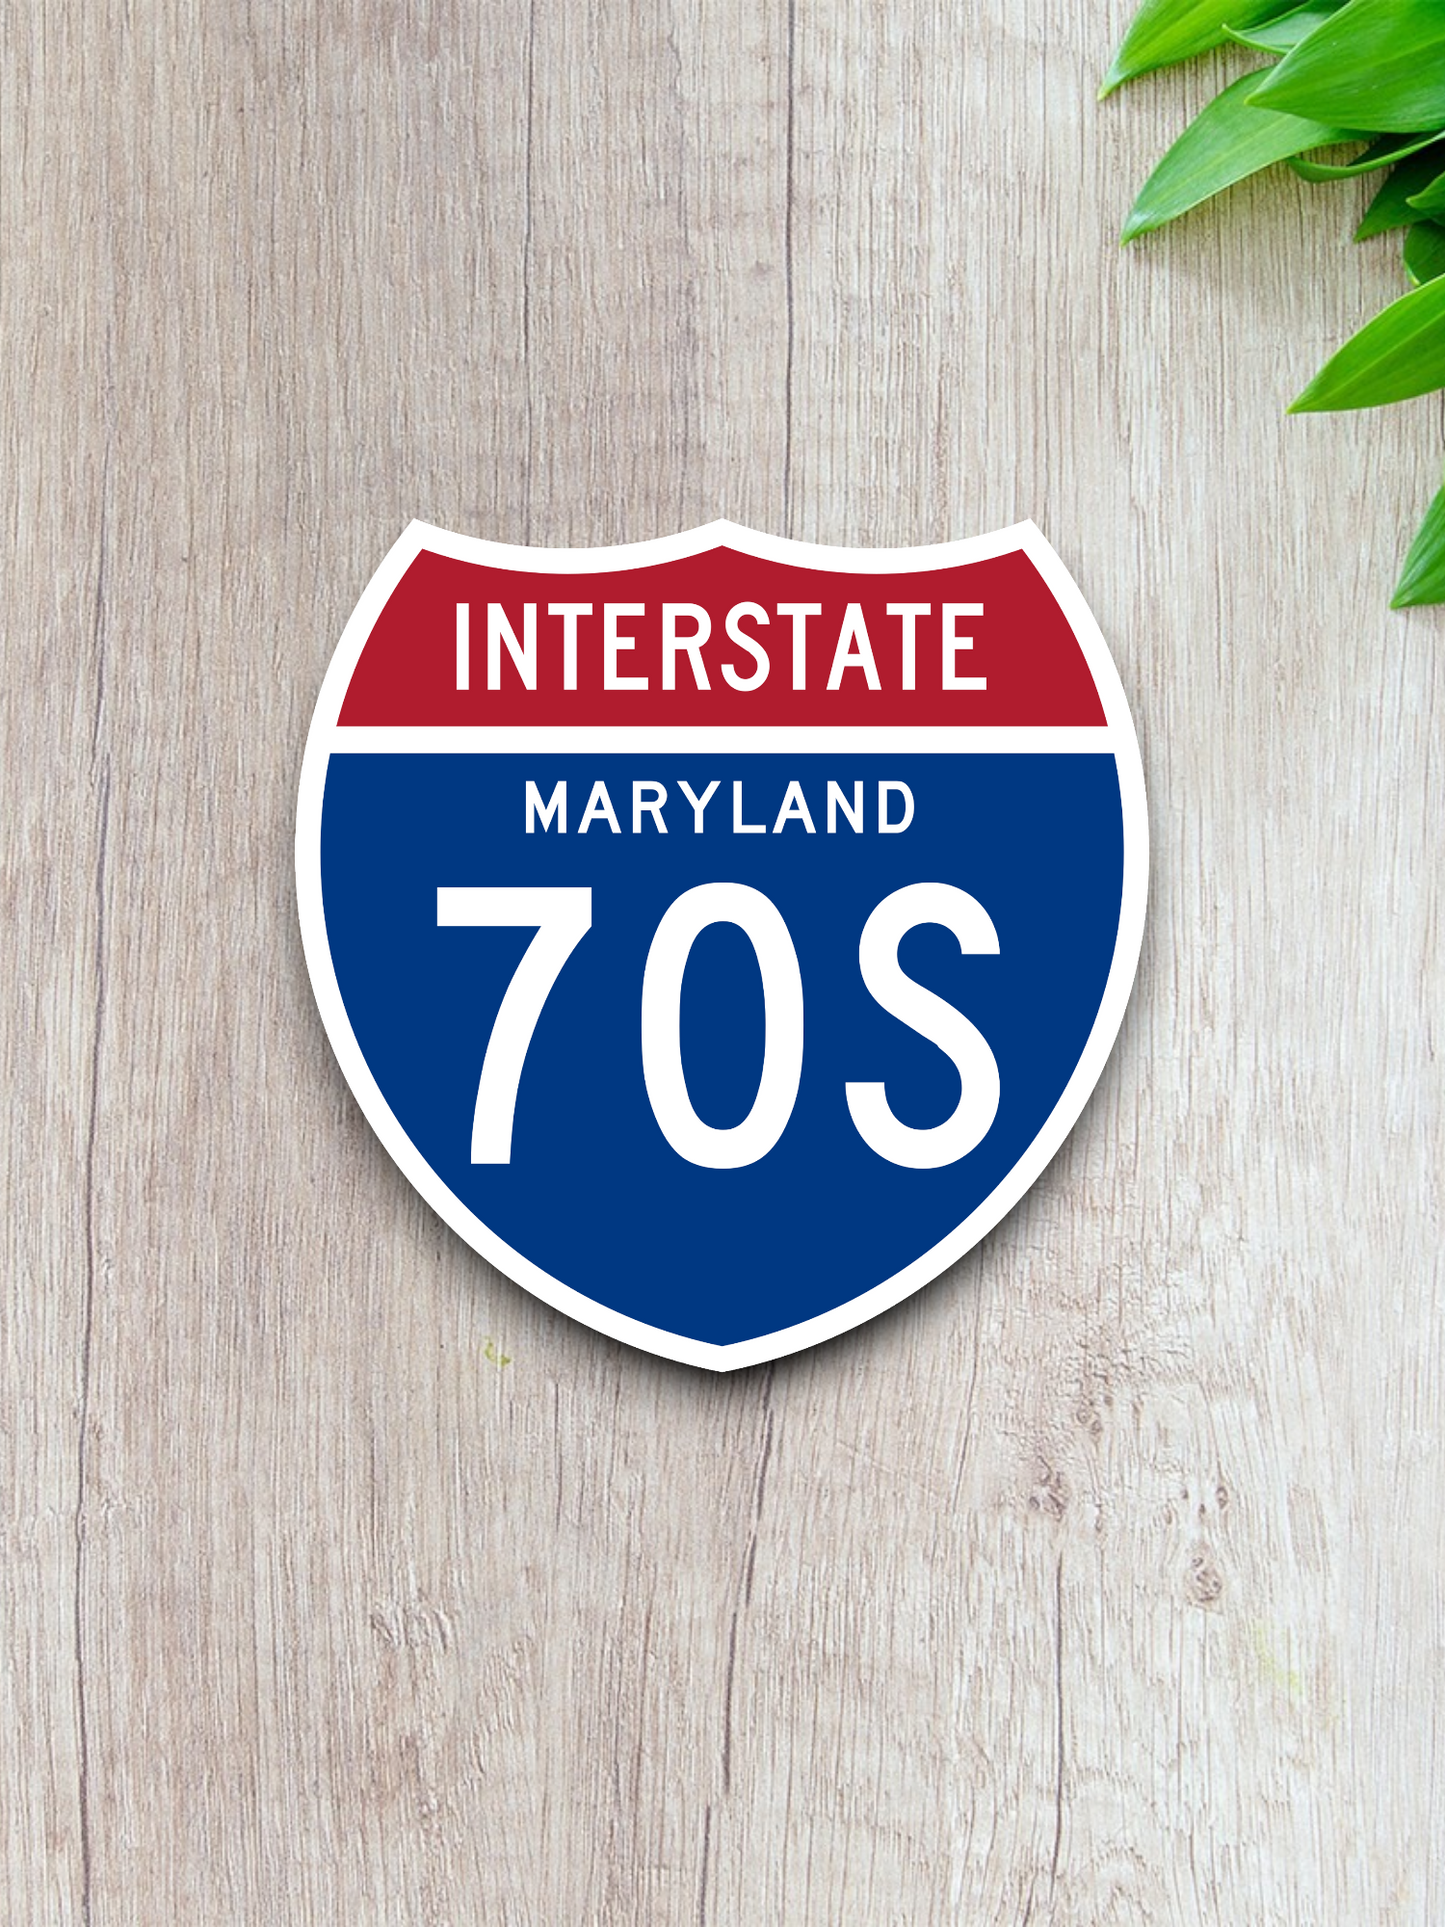 Interstate I-70S Maryland - Road Sign Sticker